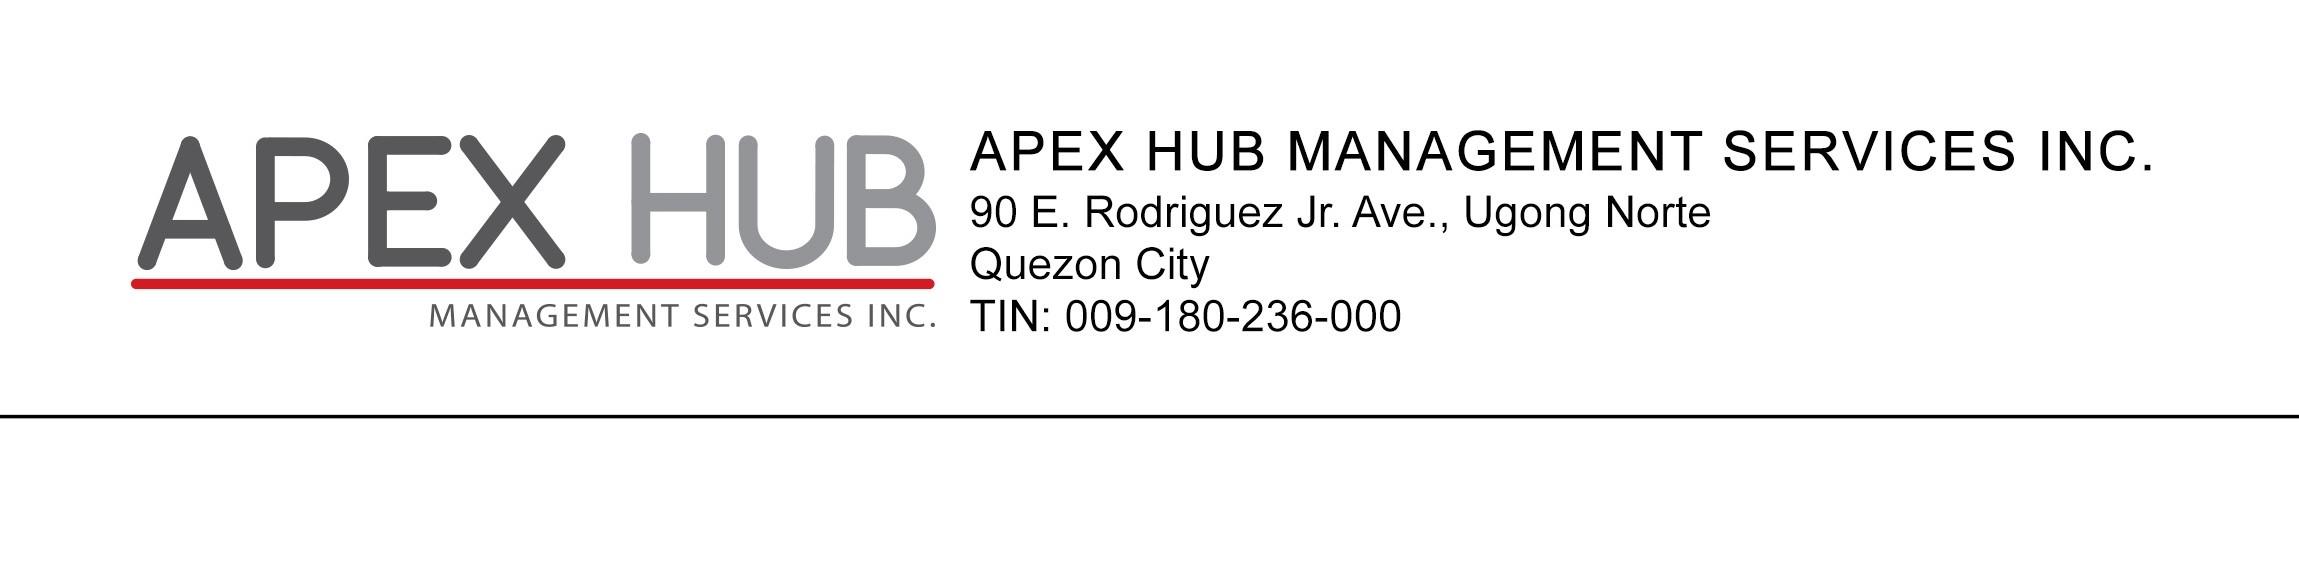 APEXHUB MANAGEMENT SERVICES INC